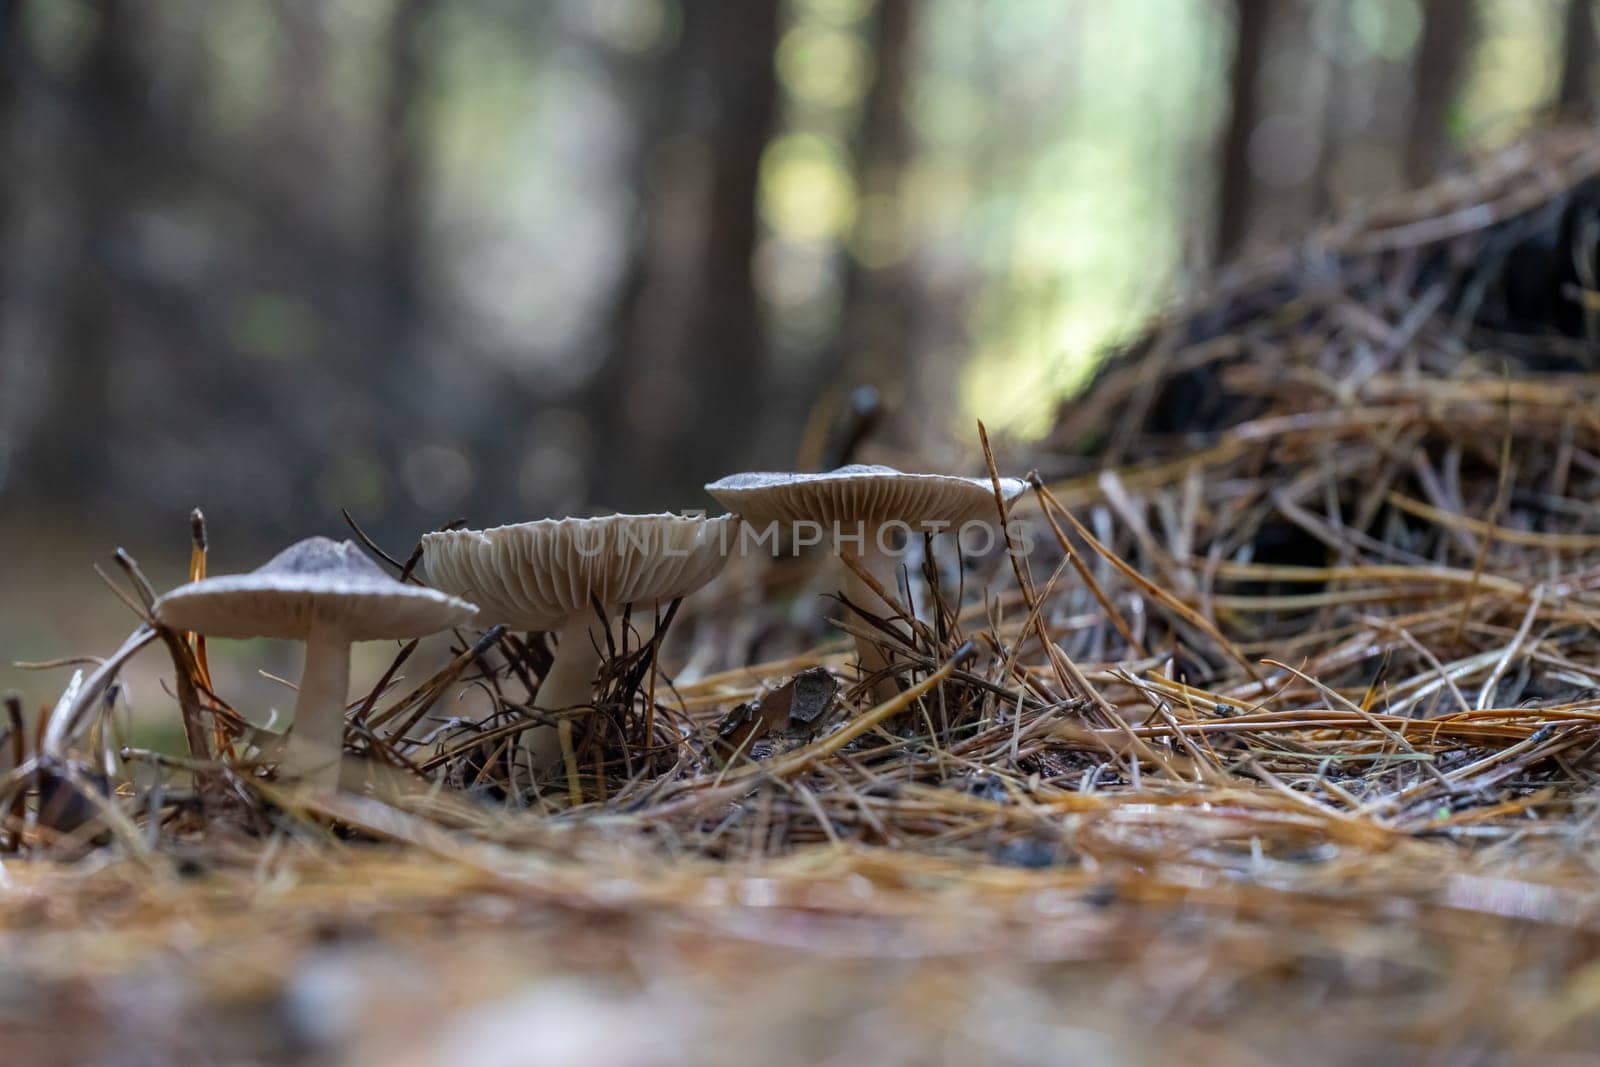 lamellar mushrooms closeup, view from below. Autumn mushrooms in the forest